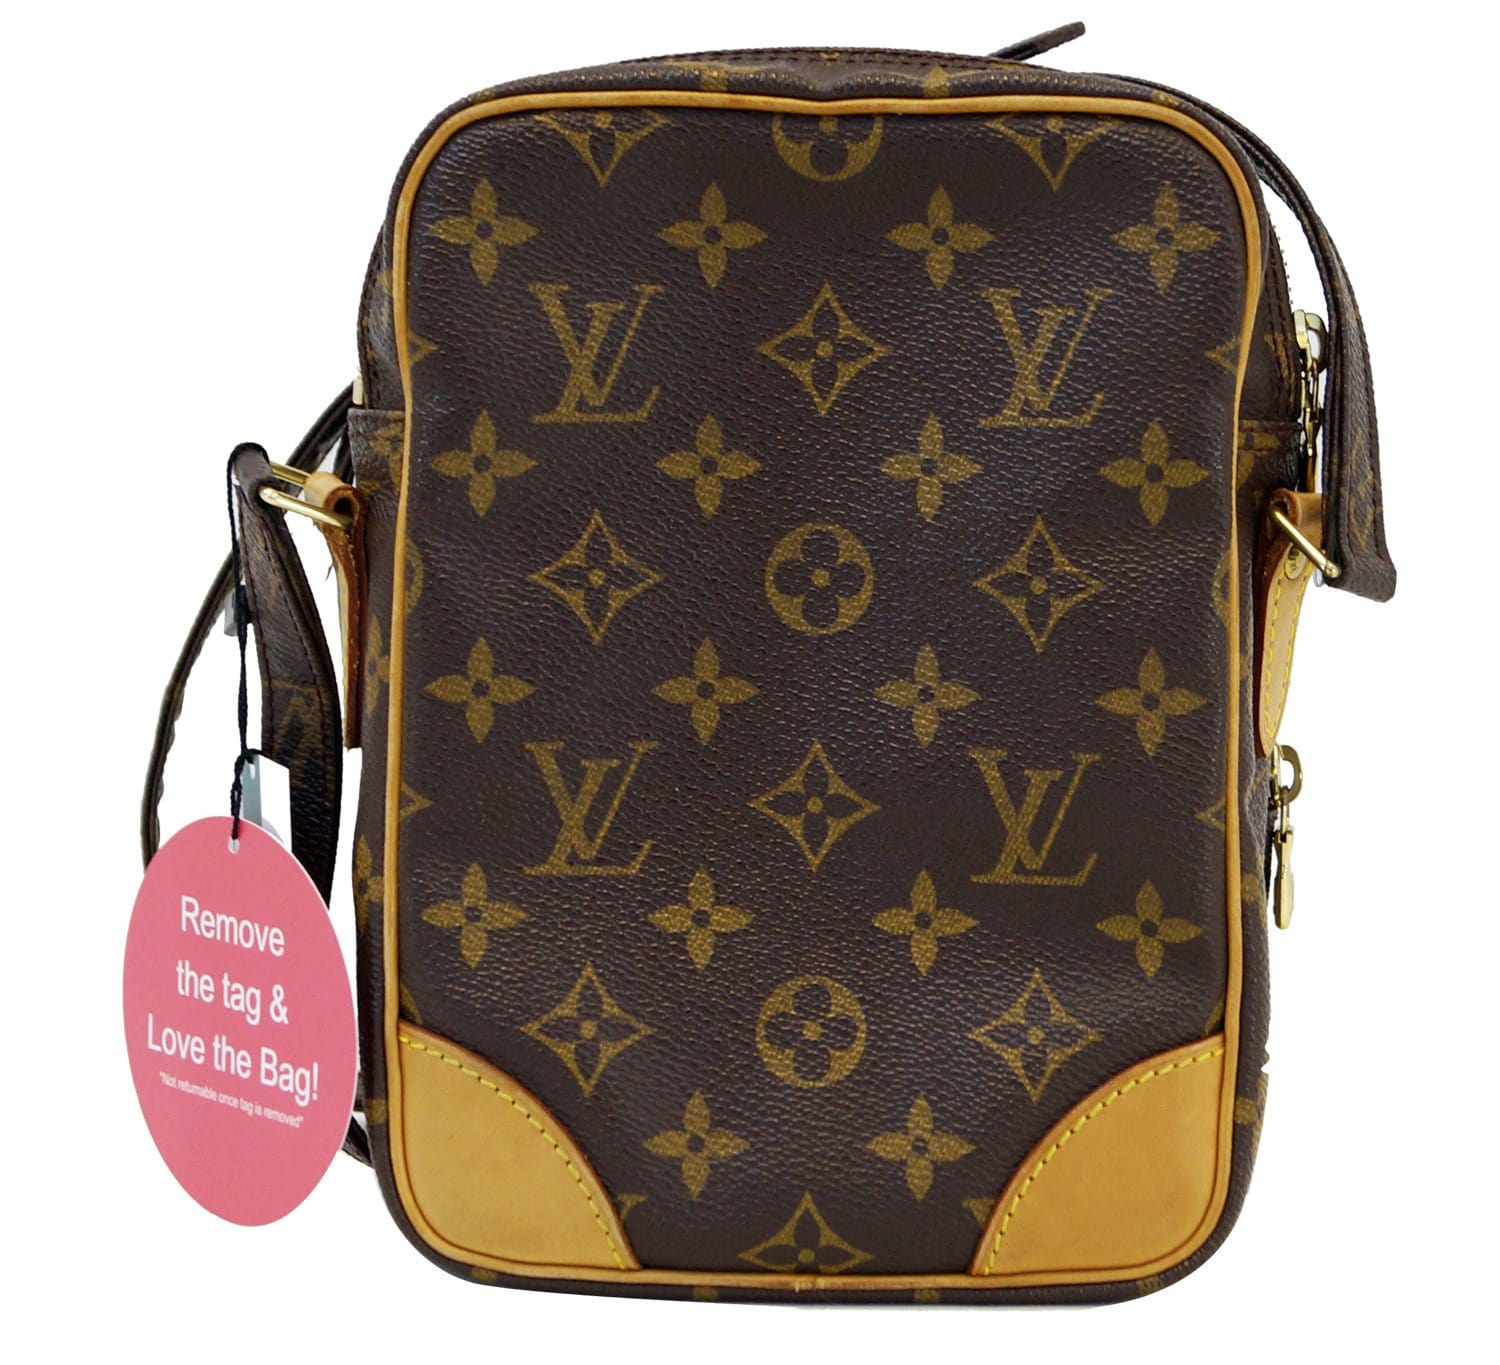 Louis Vuitton Shoulder Bags for Women - Poshmark